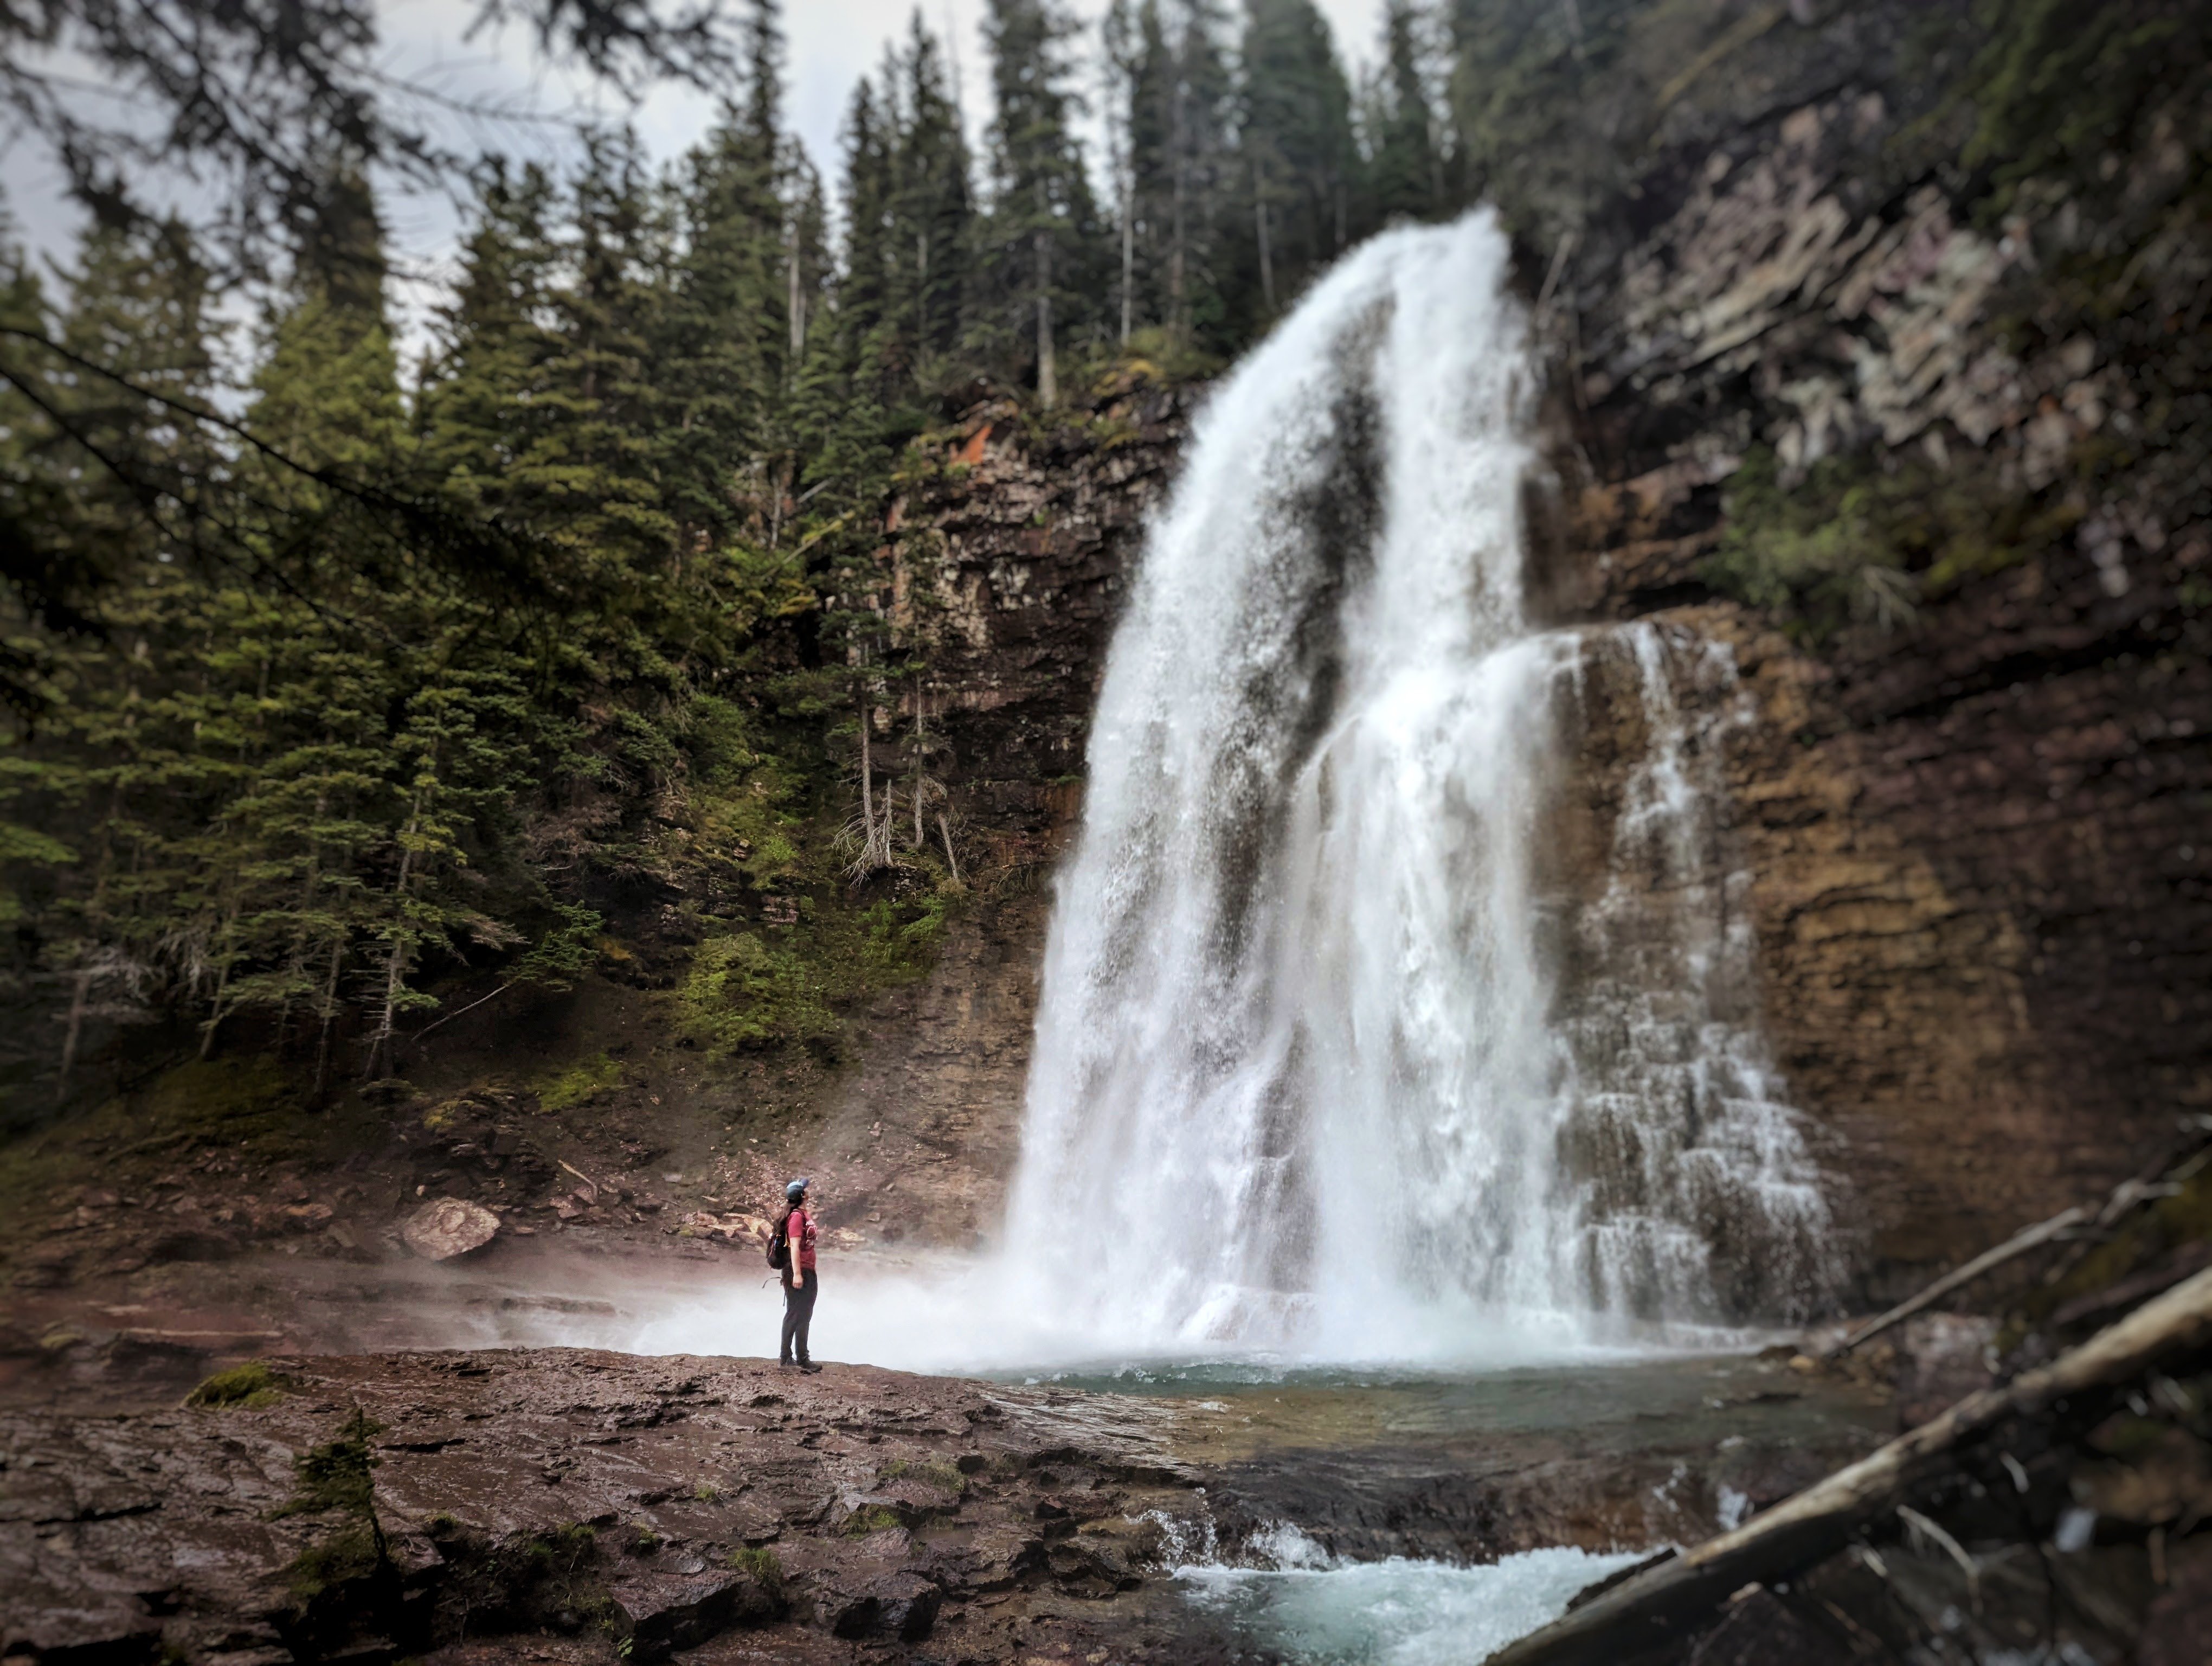 Rebekah in Glacier National Park looking at a waterfall